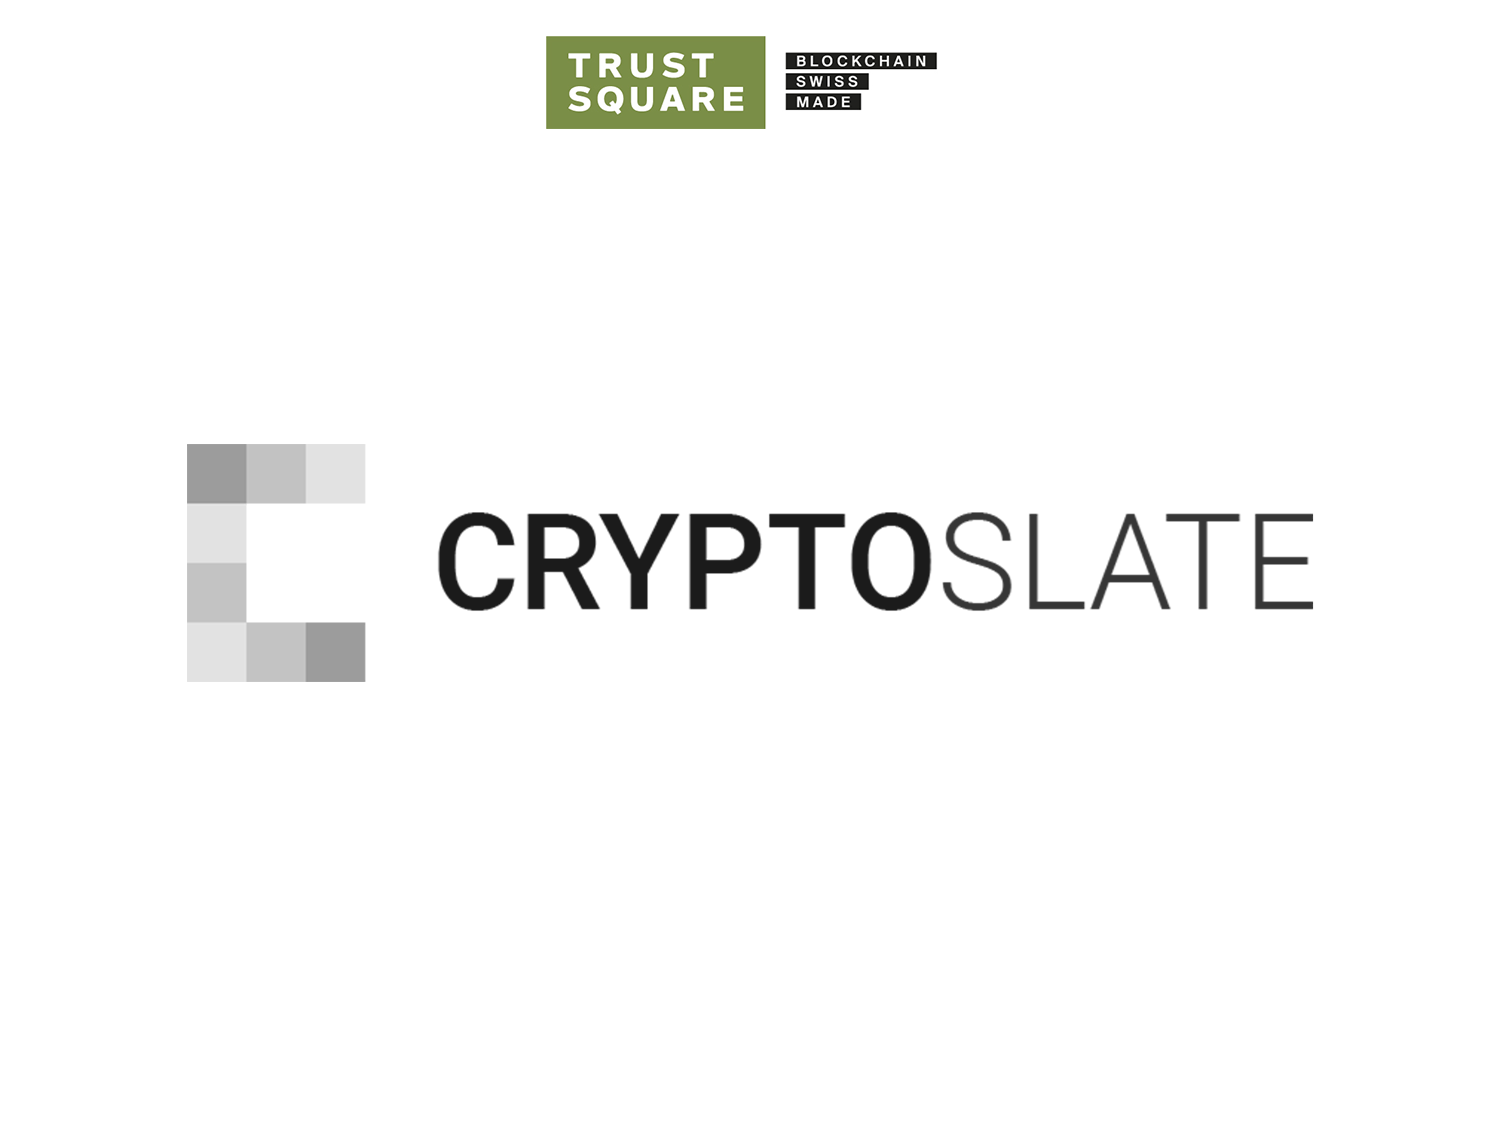 CRYPTOSLATE and TS Logo